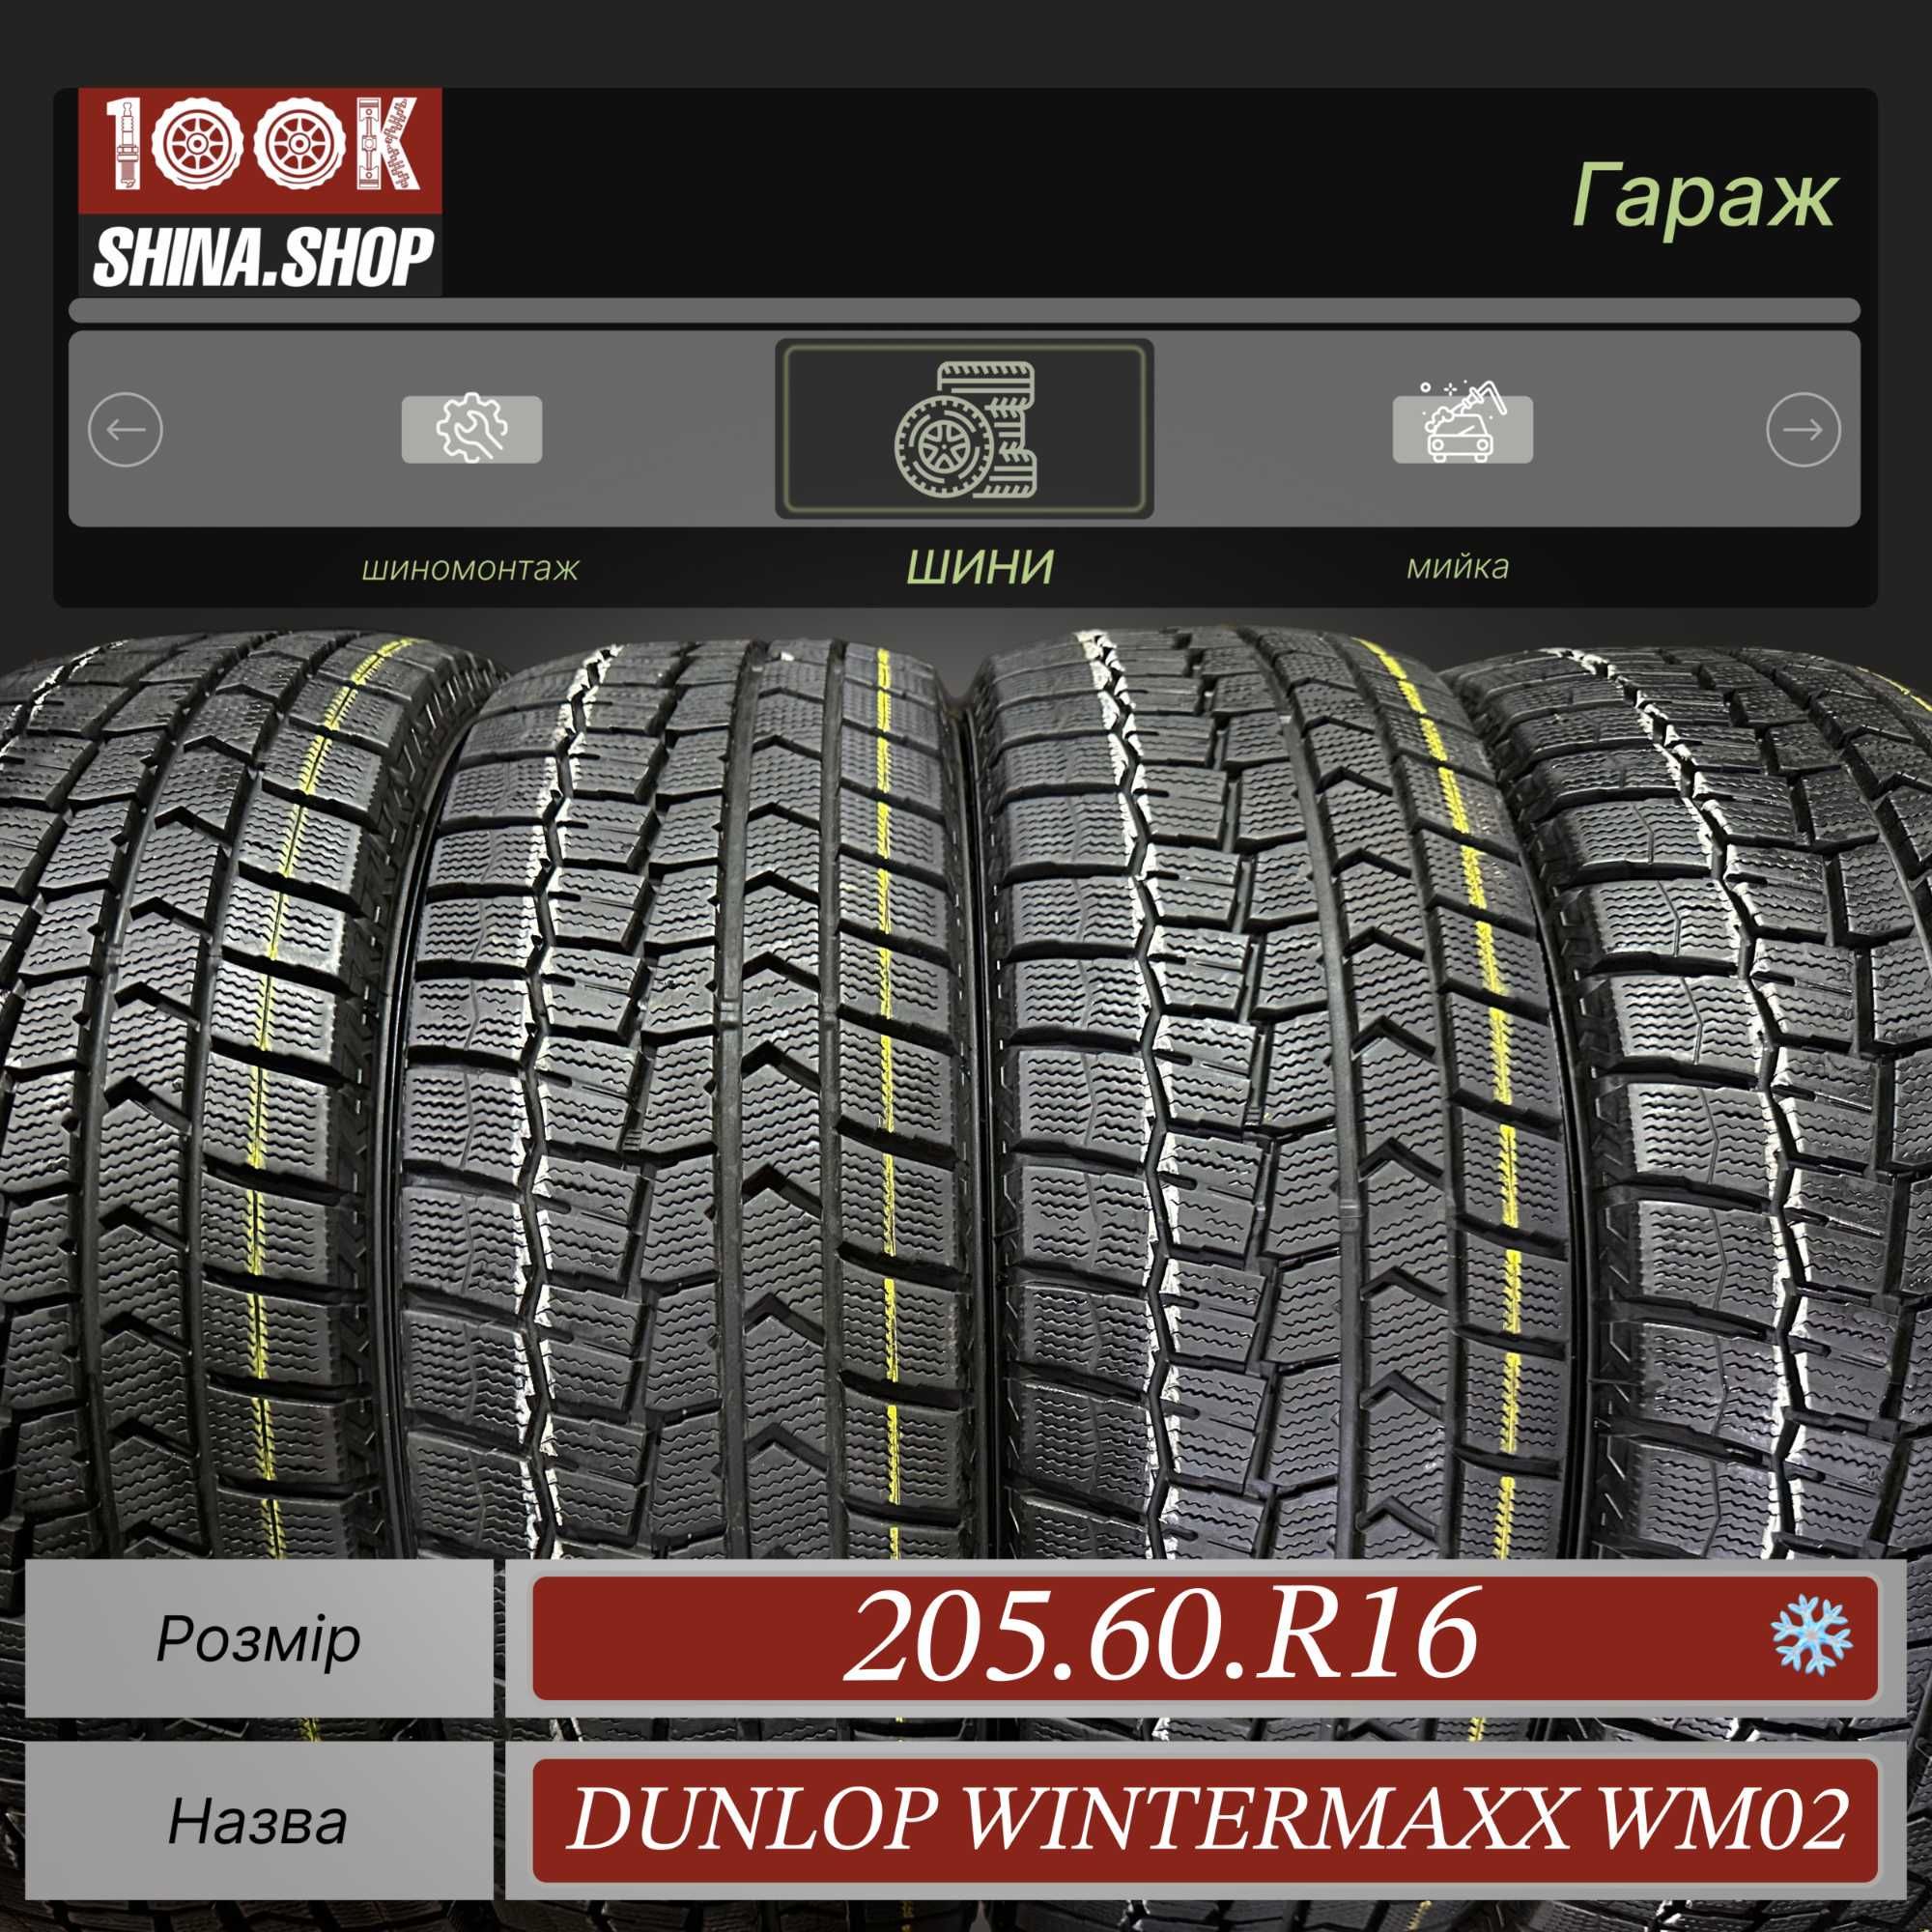 Шины БУ 205 60 R 16 Dunlop Wintermaxx wm02 Резина Япония зима